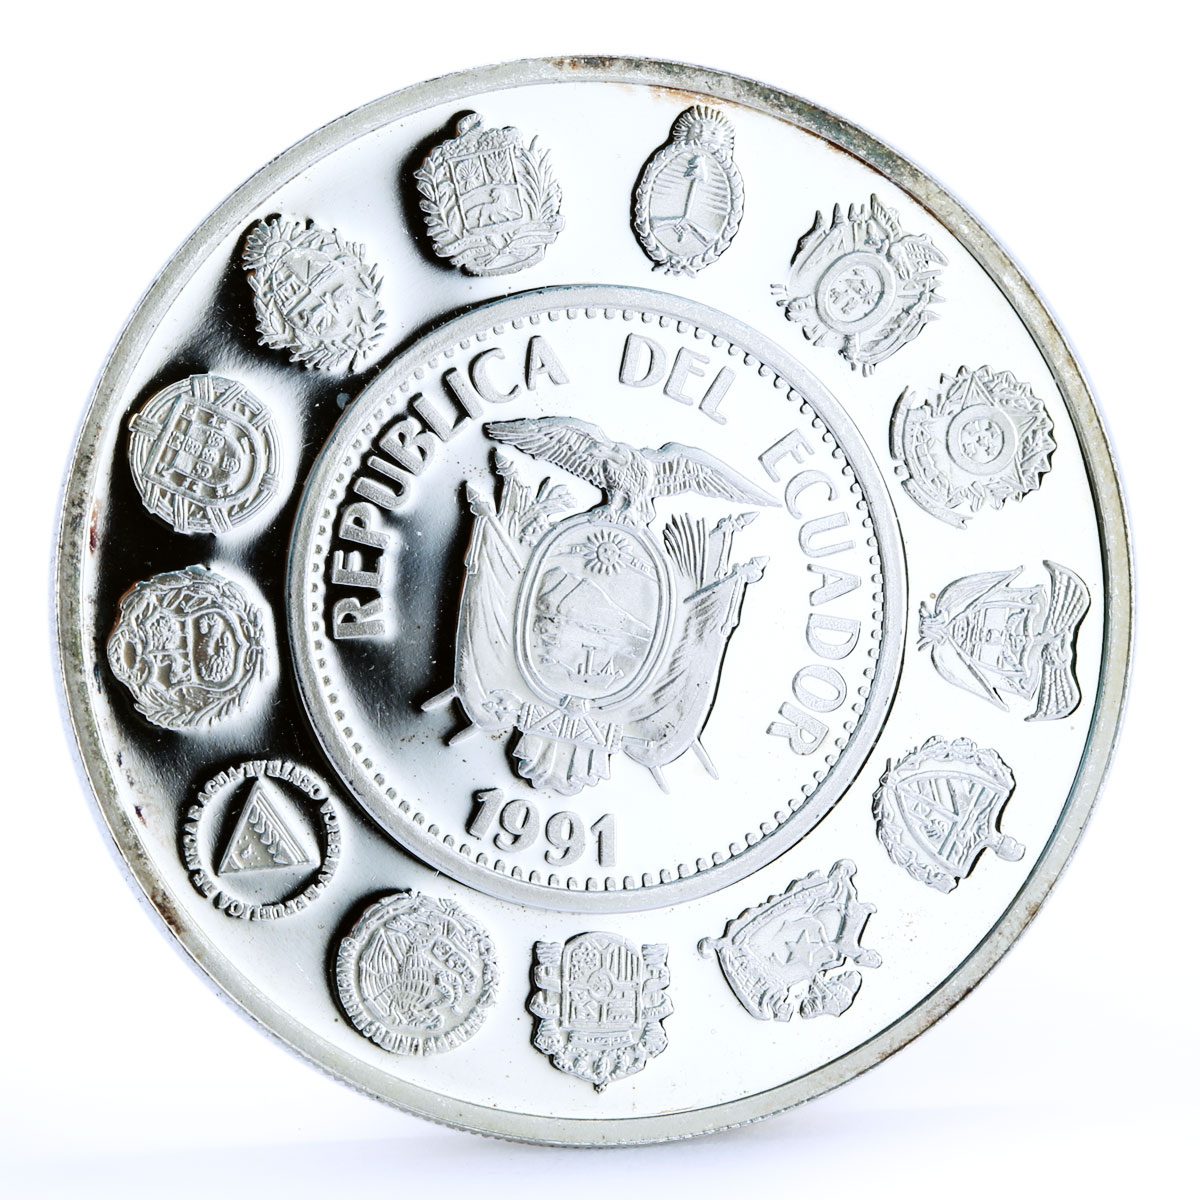 Ecuador 5000 sucres Columbus Seafaring Ships Clippers proof silver coin 1991